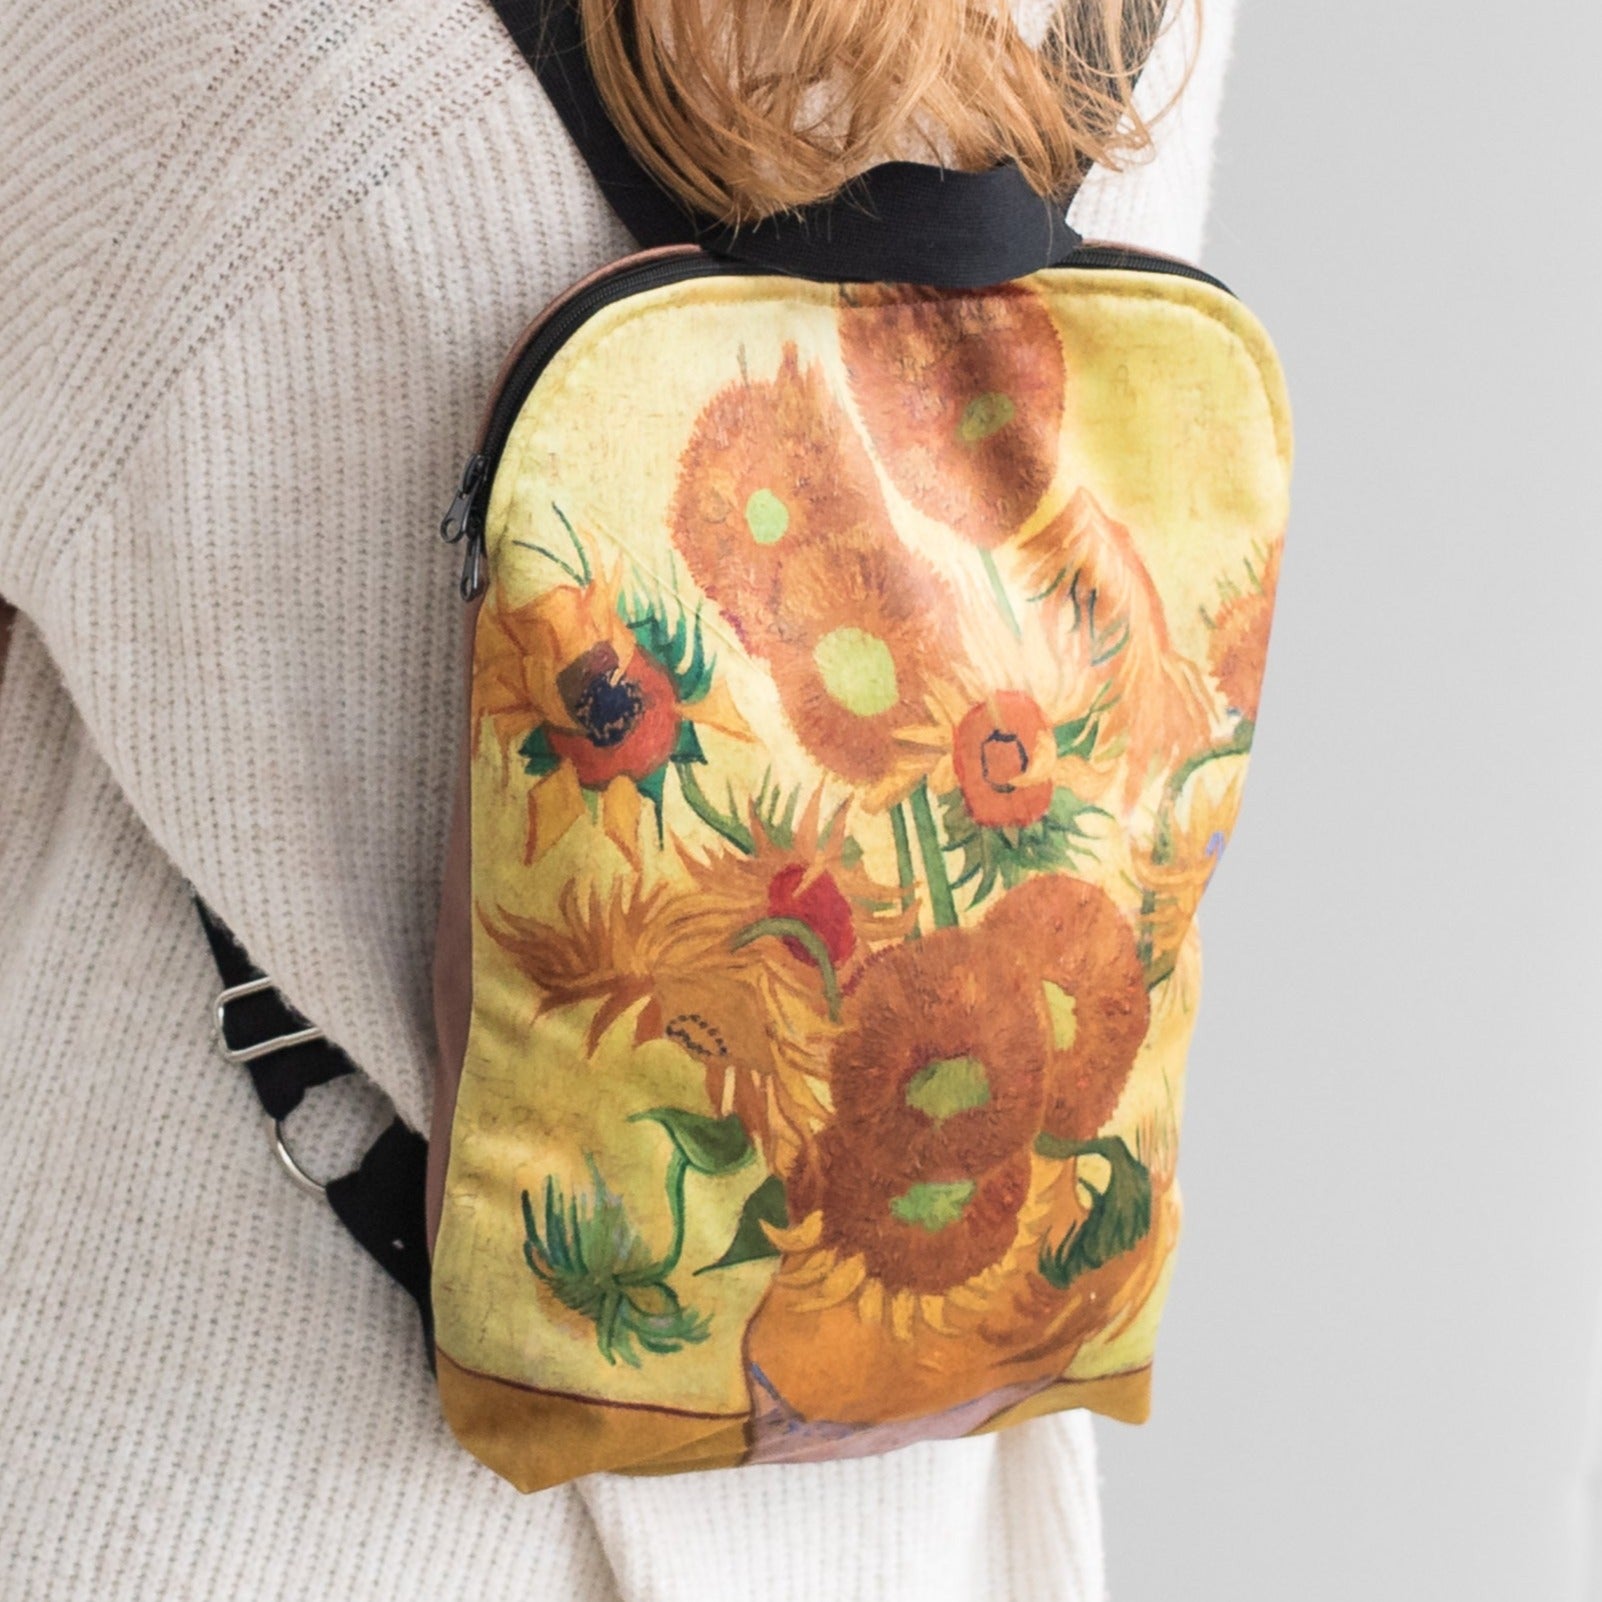 Backpack Vincent van Gogh "Sunflowers"